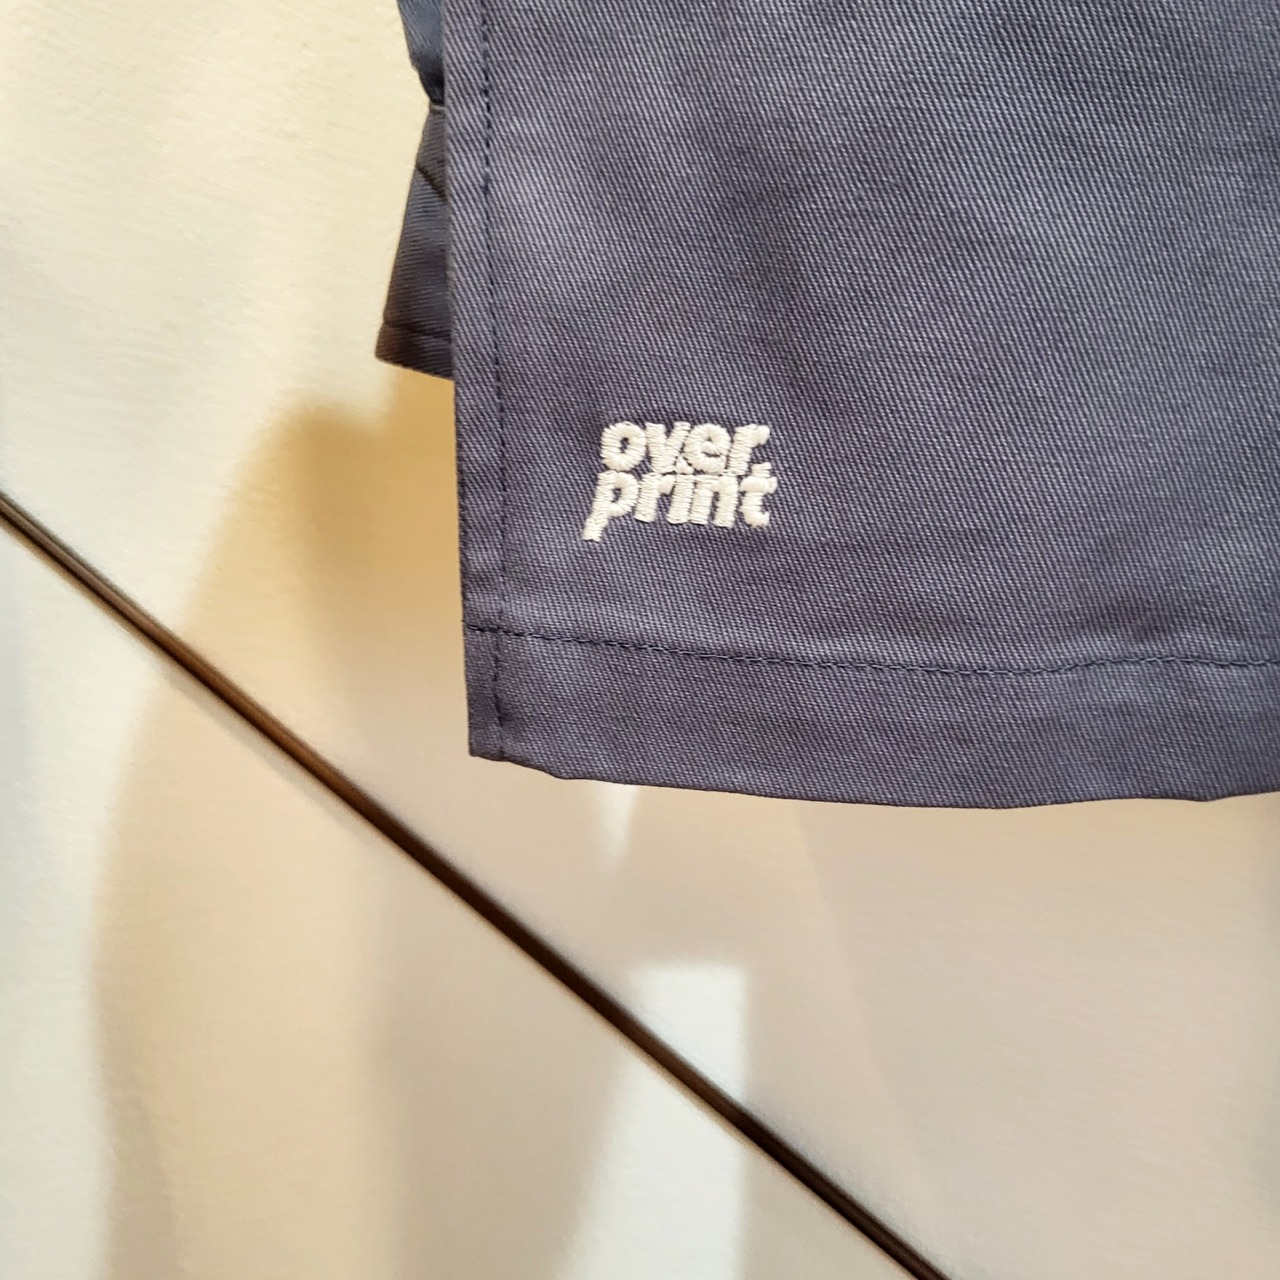 【over print】gate park shirt